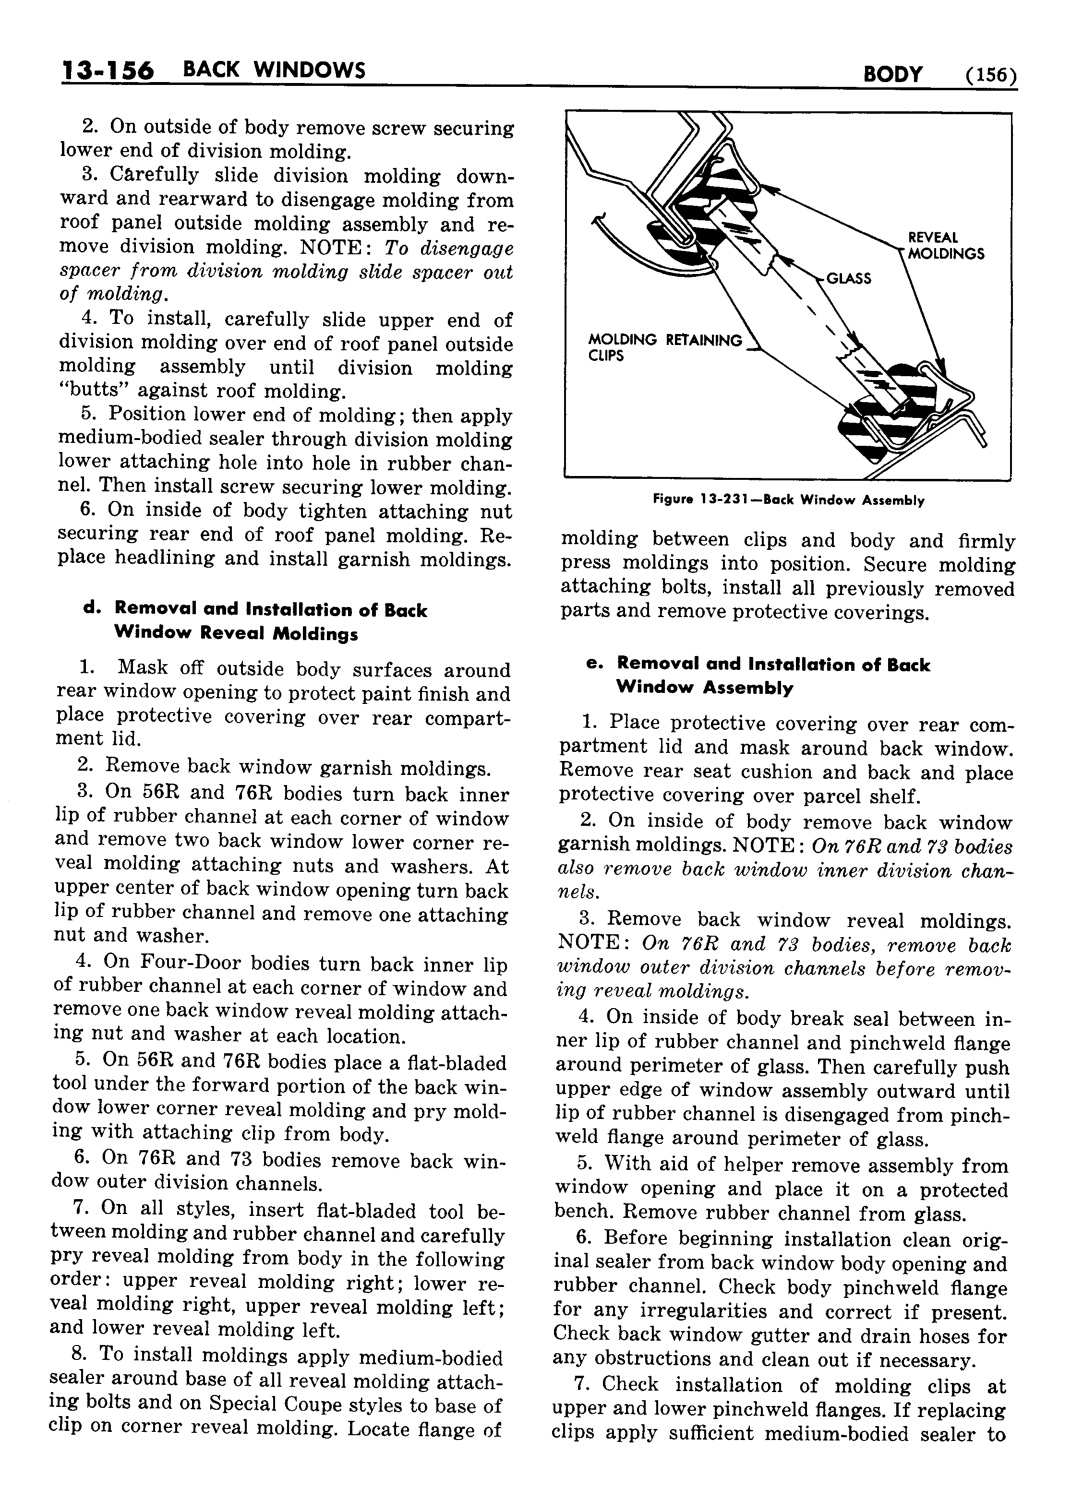 n_1957 Buick Body Service Manual-158-158.jpg